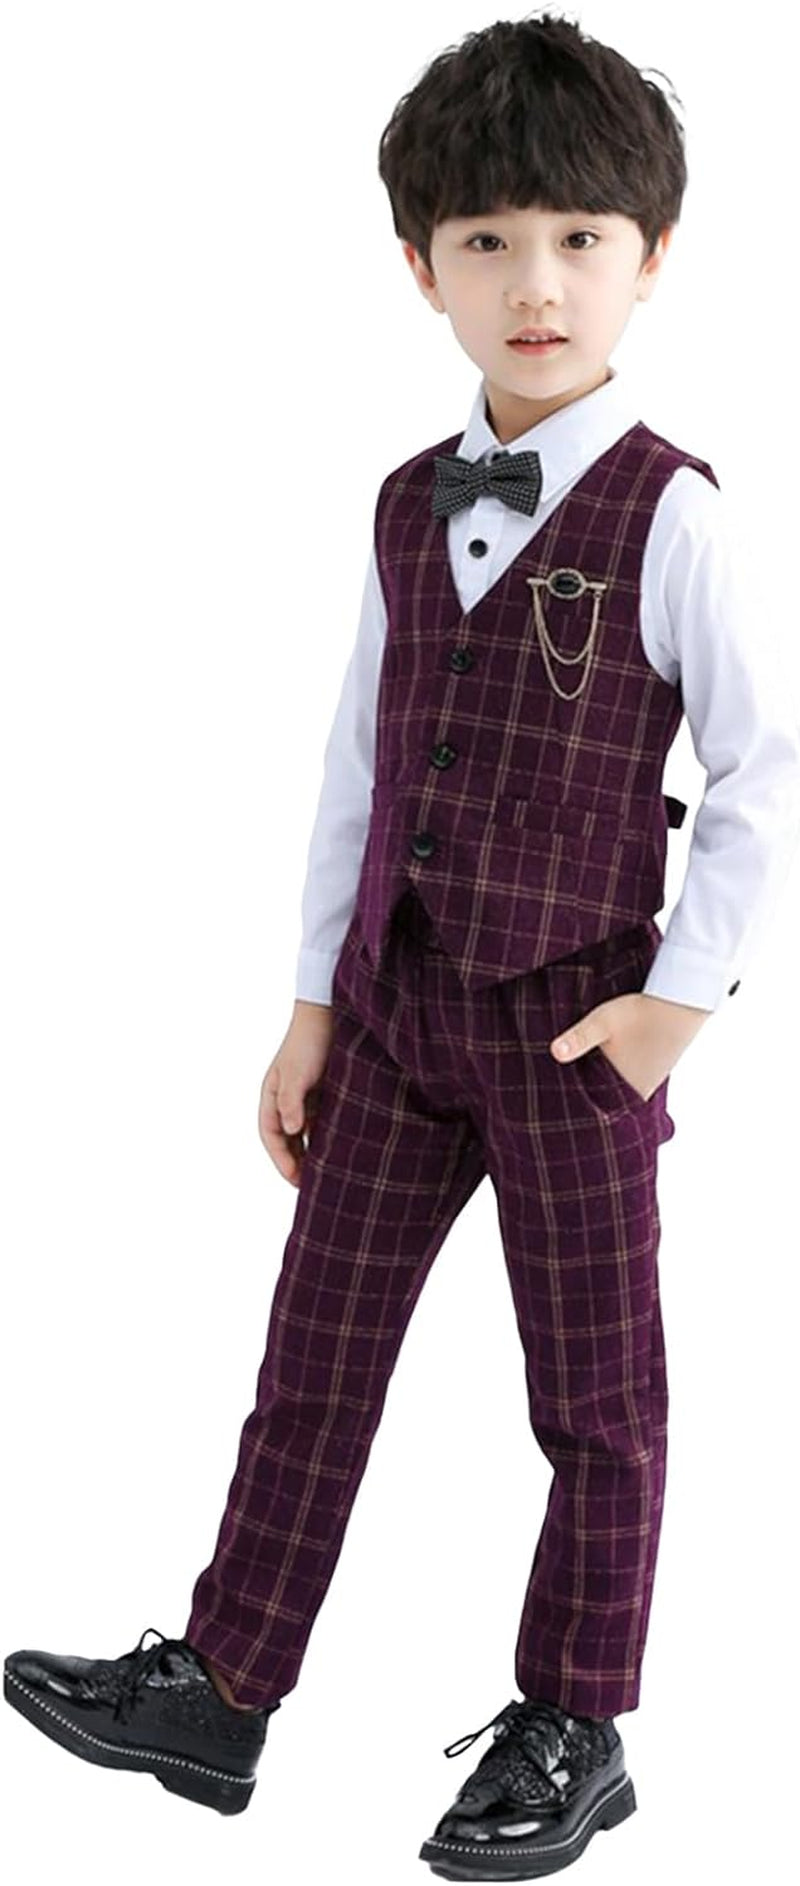 Boys Vest Pants Set Plaid Dress Suit with Shirt Kids Tuxedo Formal Wedding Ring Bearer Outfit